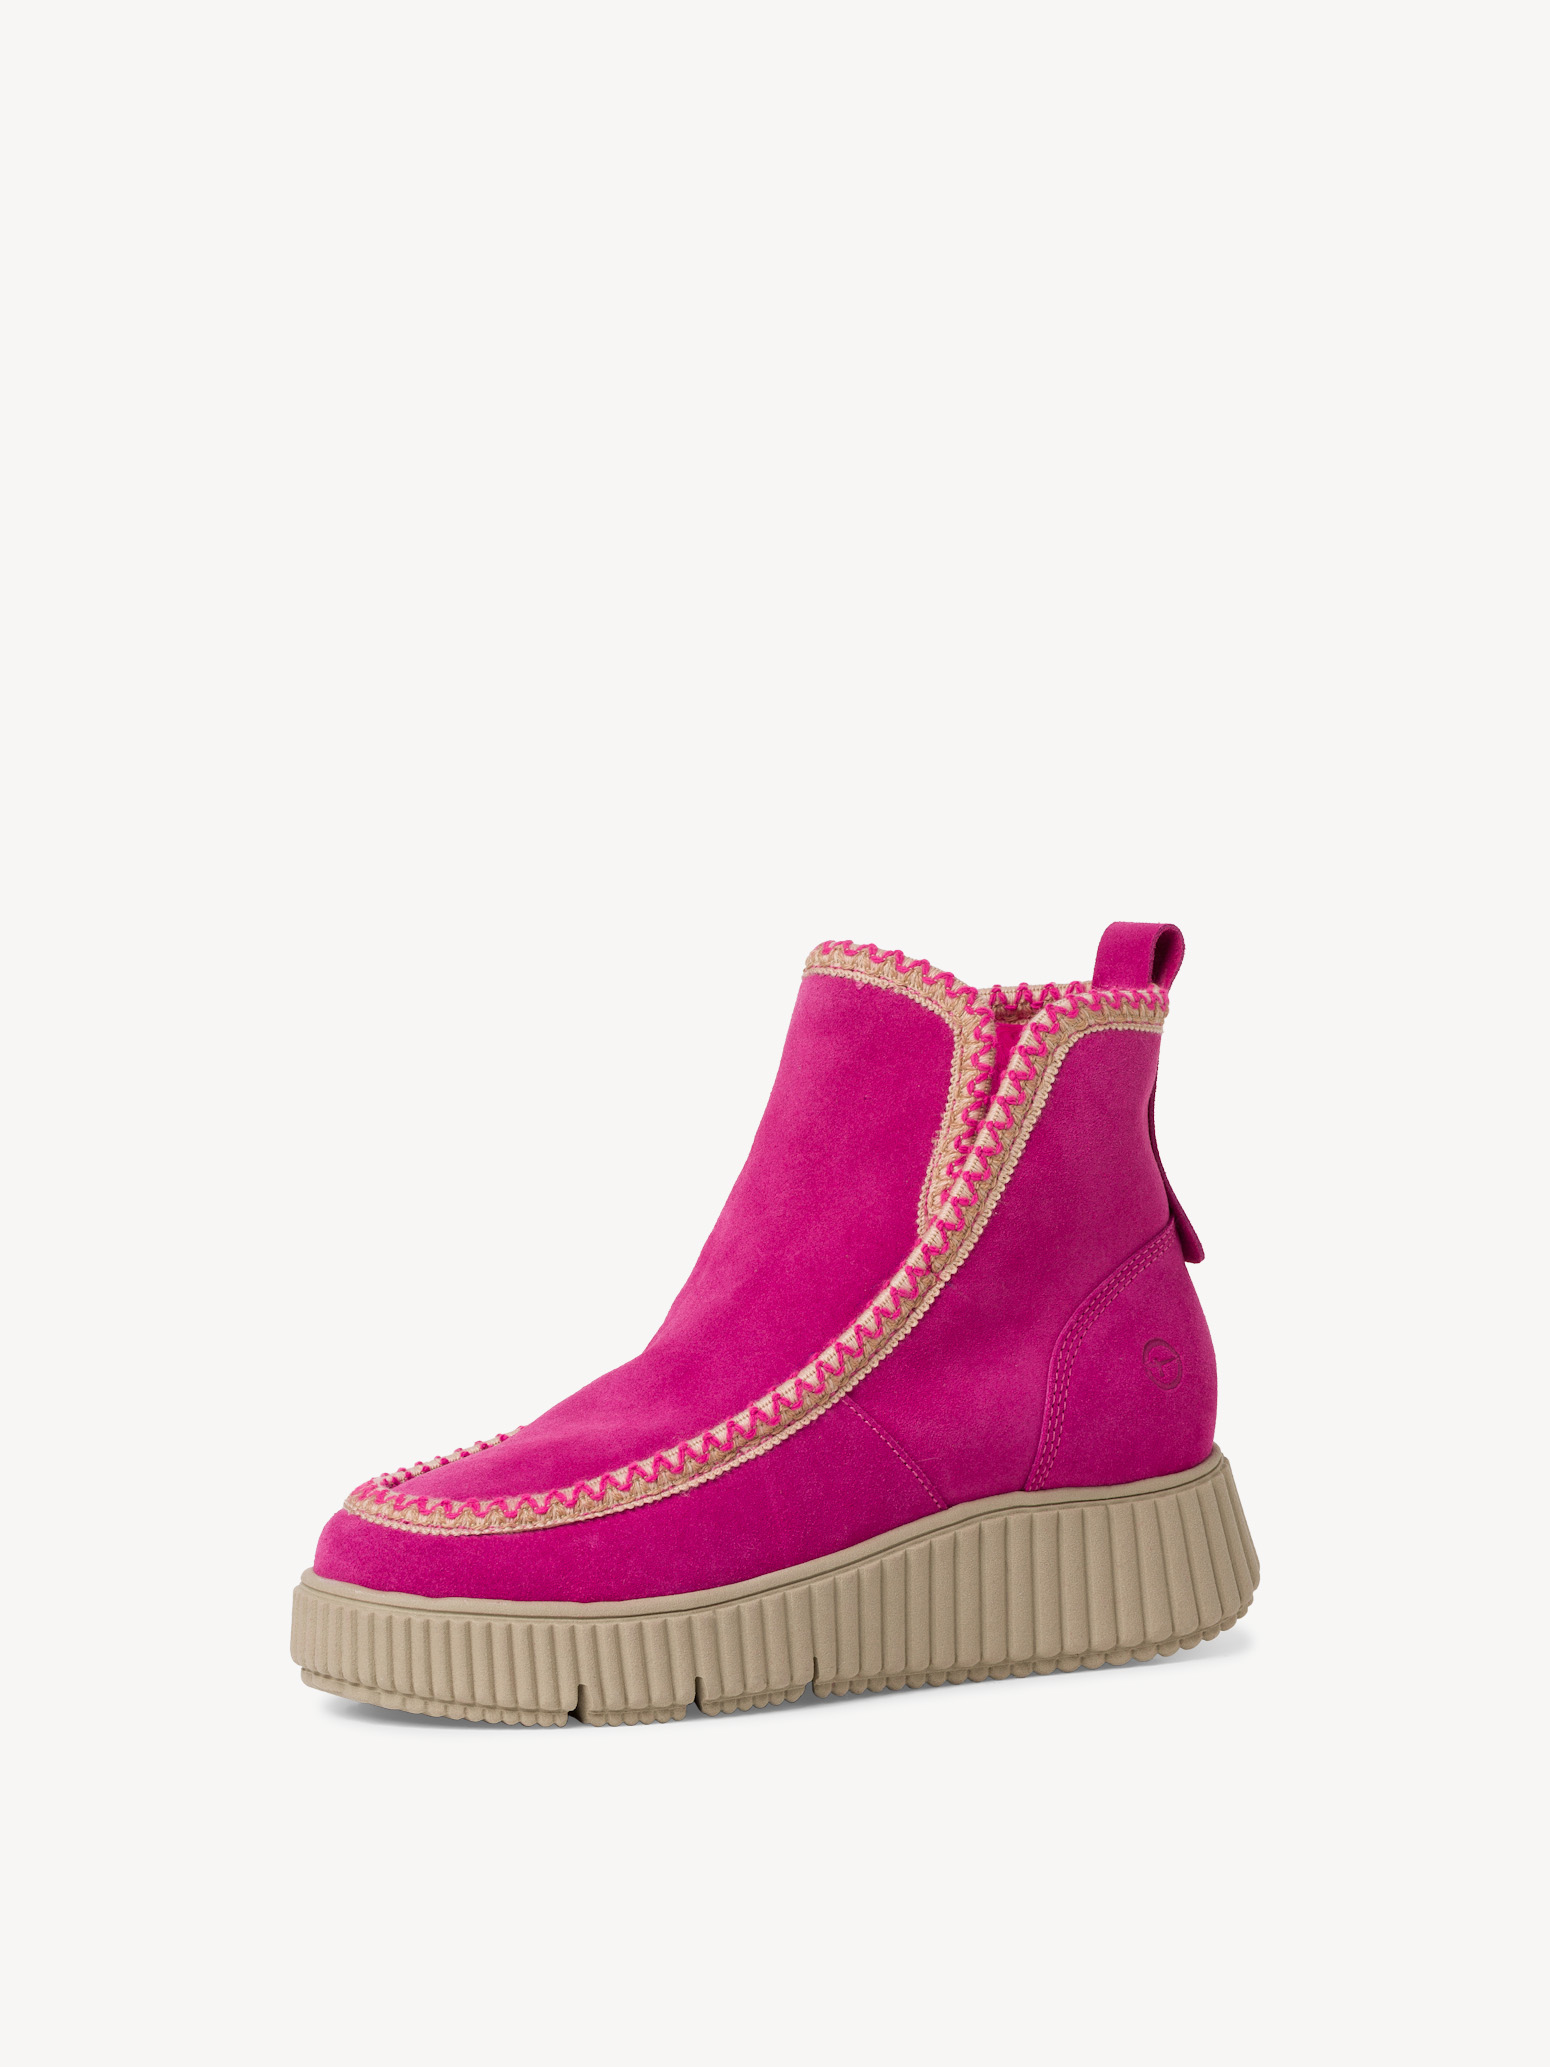 Lederstiefelette - pink Warmfutter 1-26865-41-513: Tamaris Stiefeletten &  Boots online kaufen!